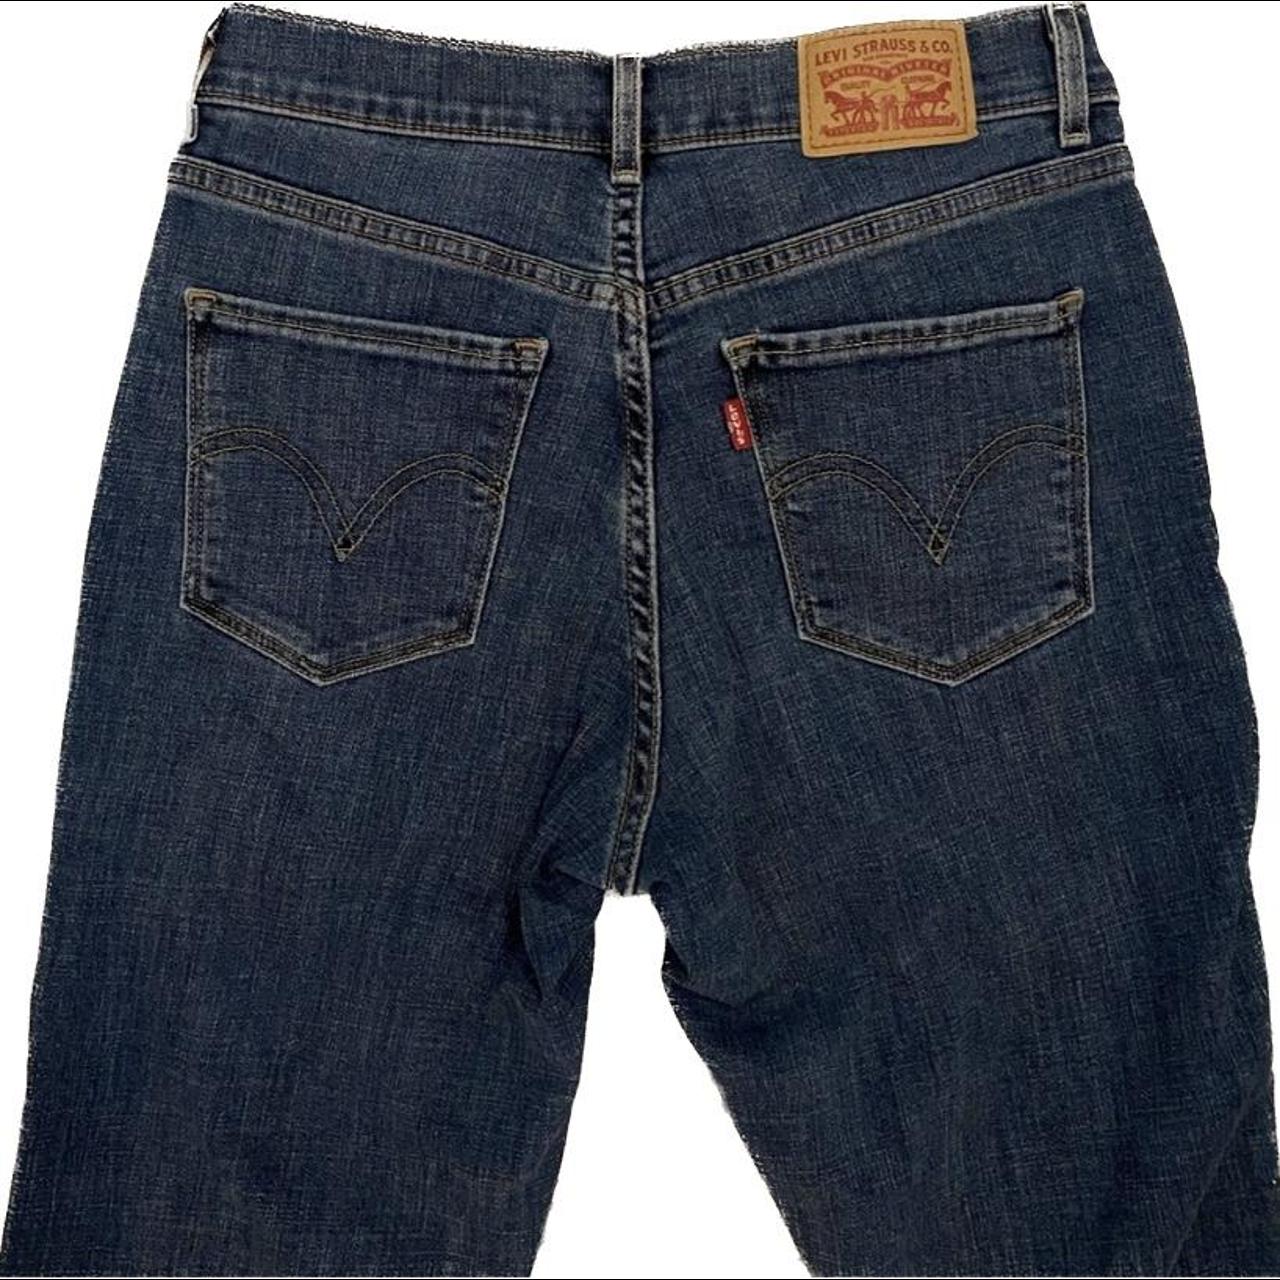 Levis Classic bootcut jeans Low/Mid rise Stretch... - Depop